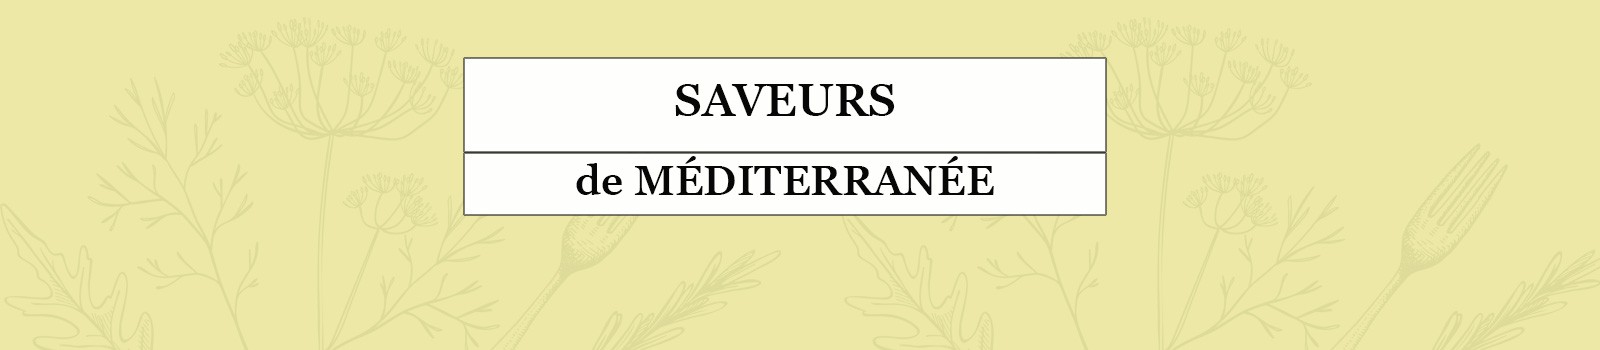 Saveurs de Méditerranée